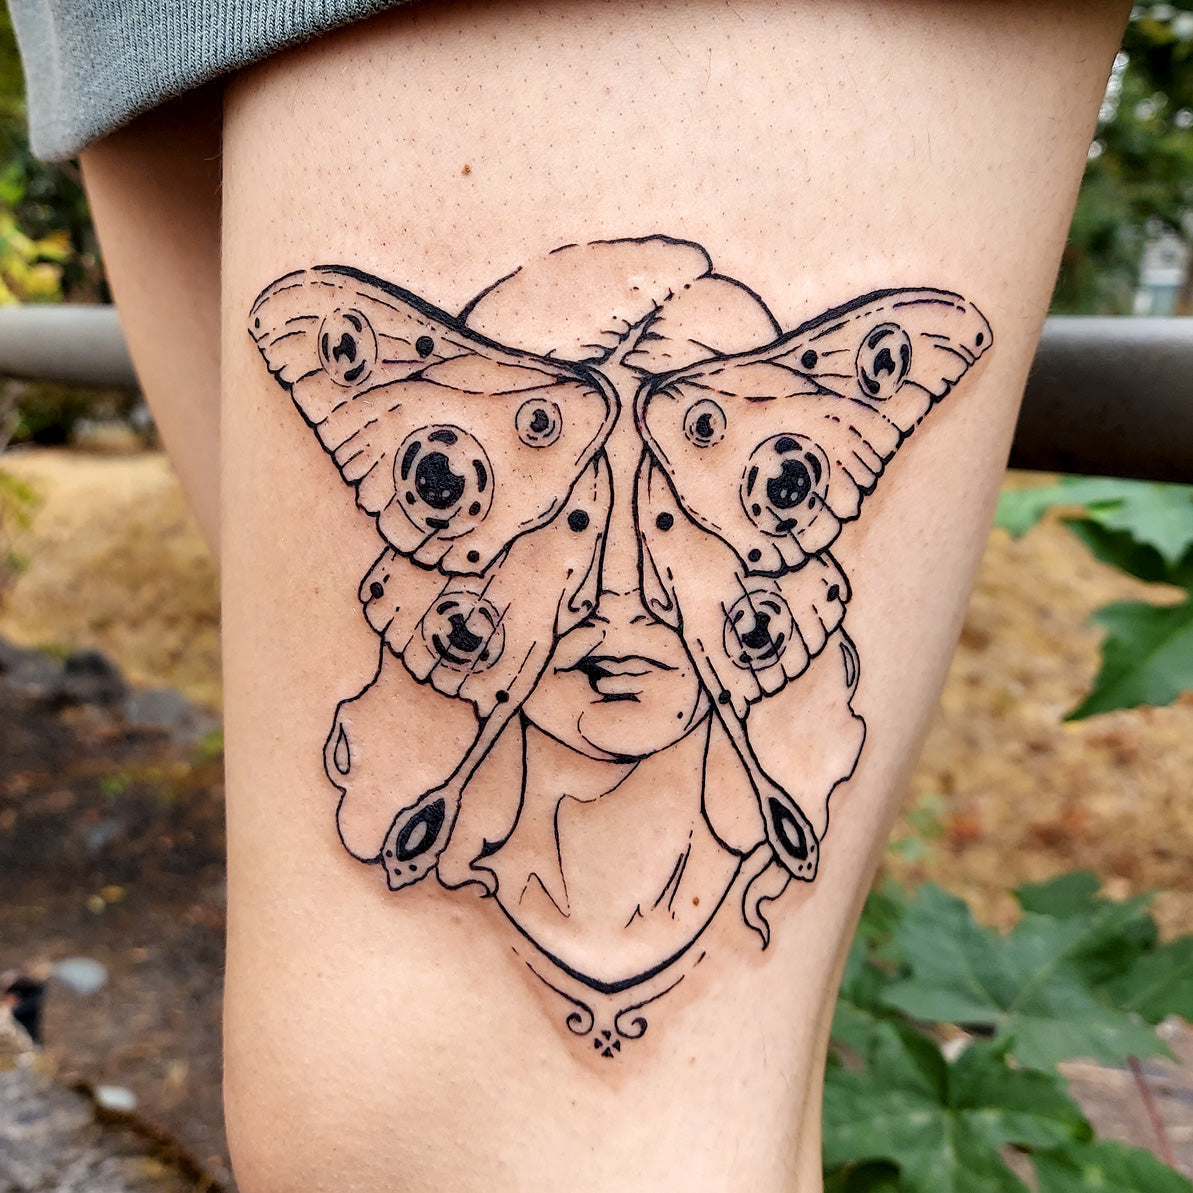 luna moth face tattoo on thigh by Vincent Li